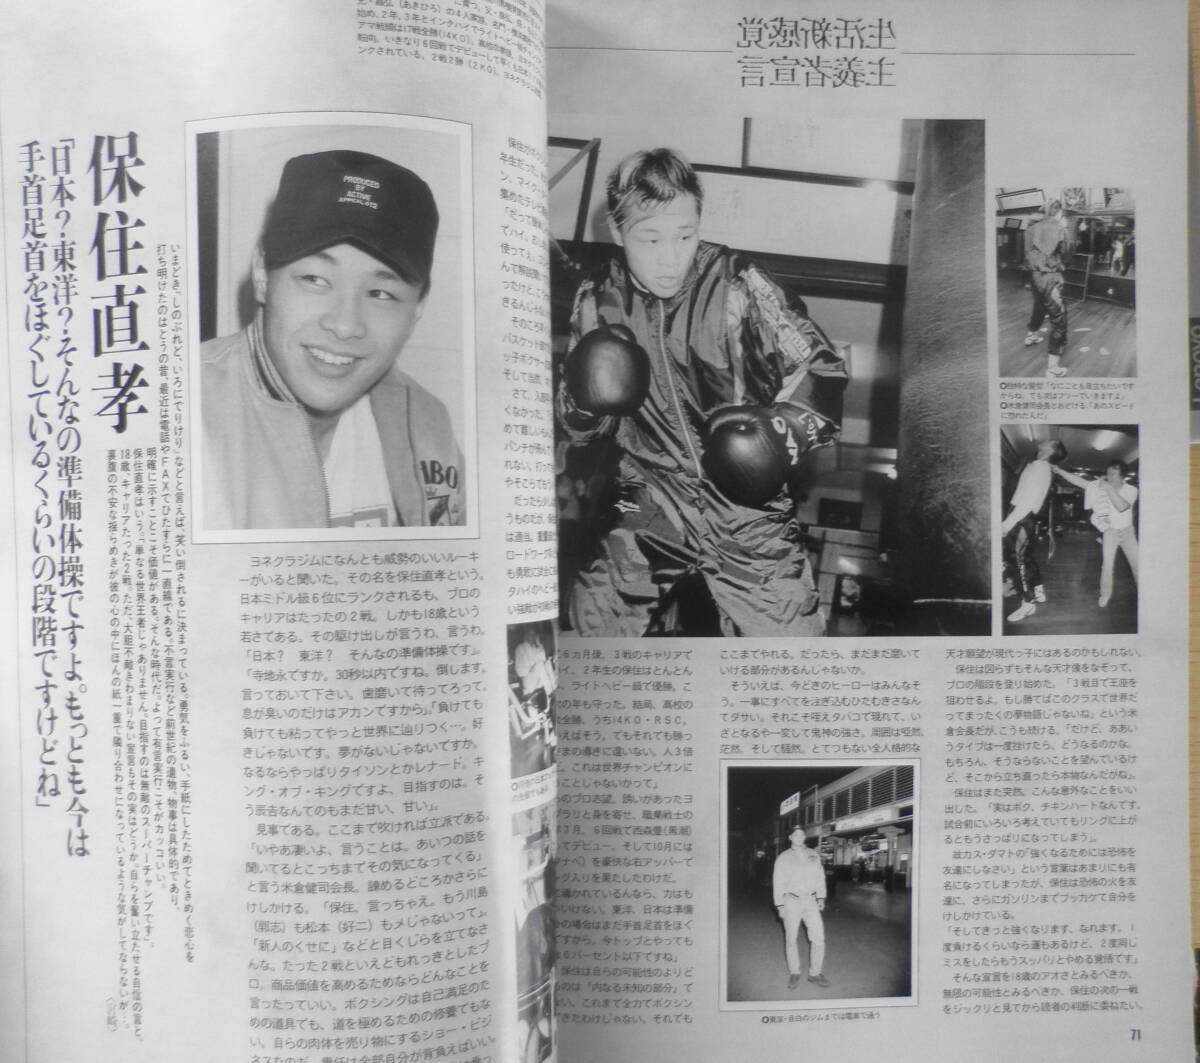  boxing magazine 1993 year 12 month number ..,..... Baseball * magazine company a